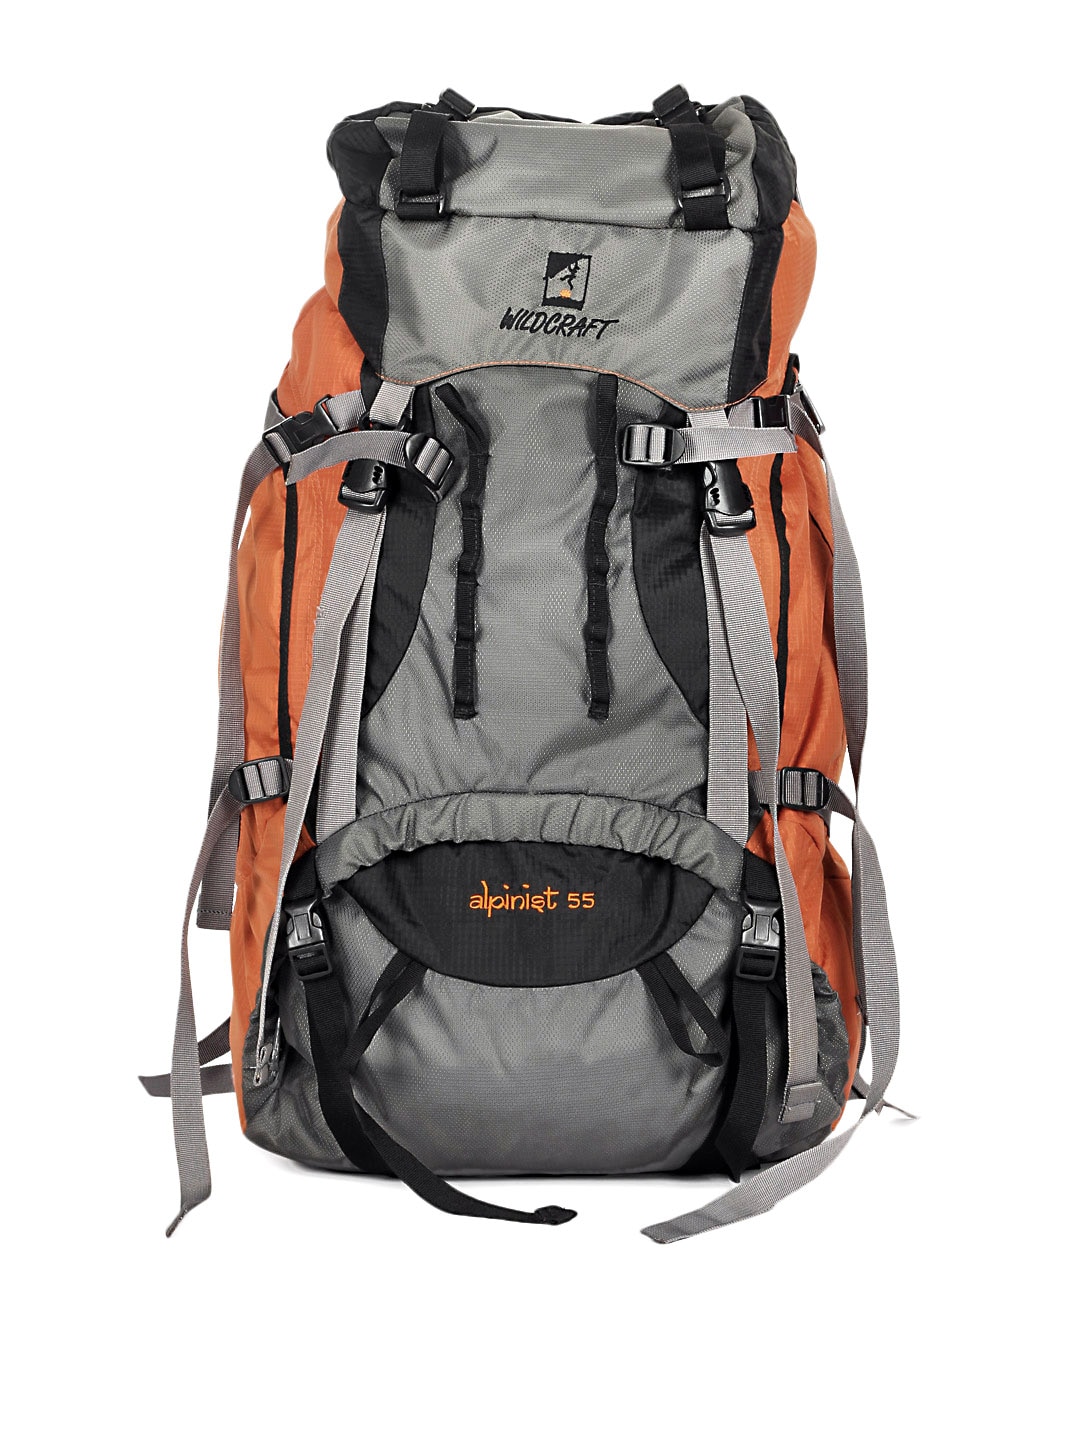 Wildcraft Unisex Orange Alpinist 55 Backpack